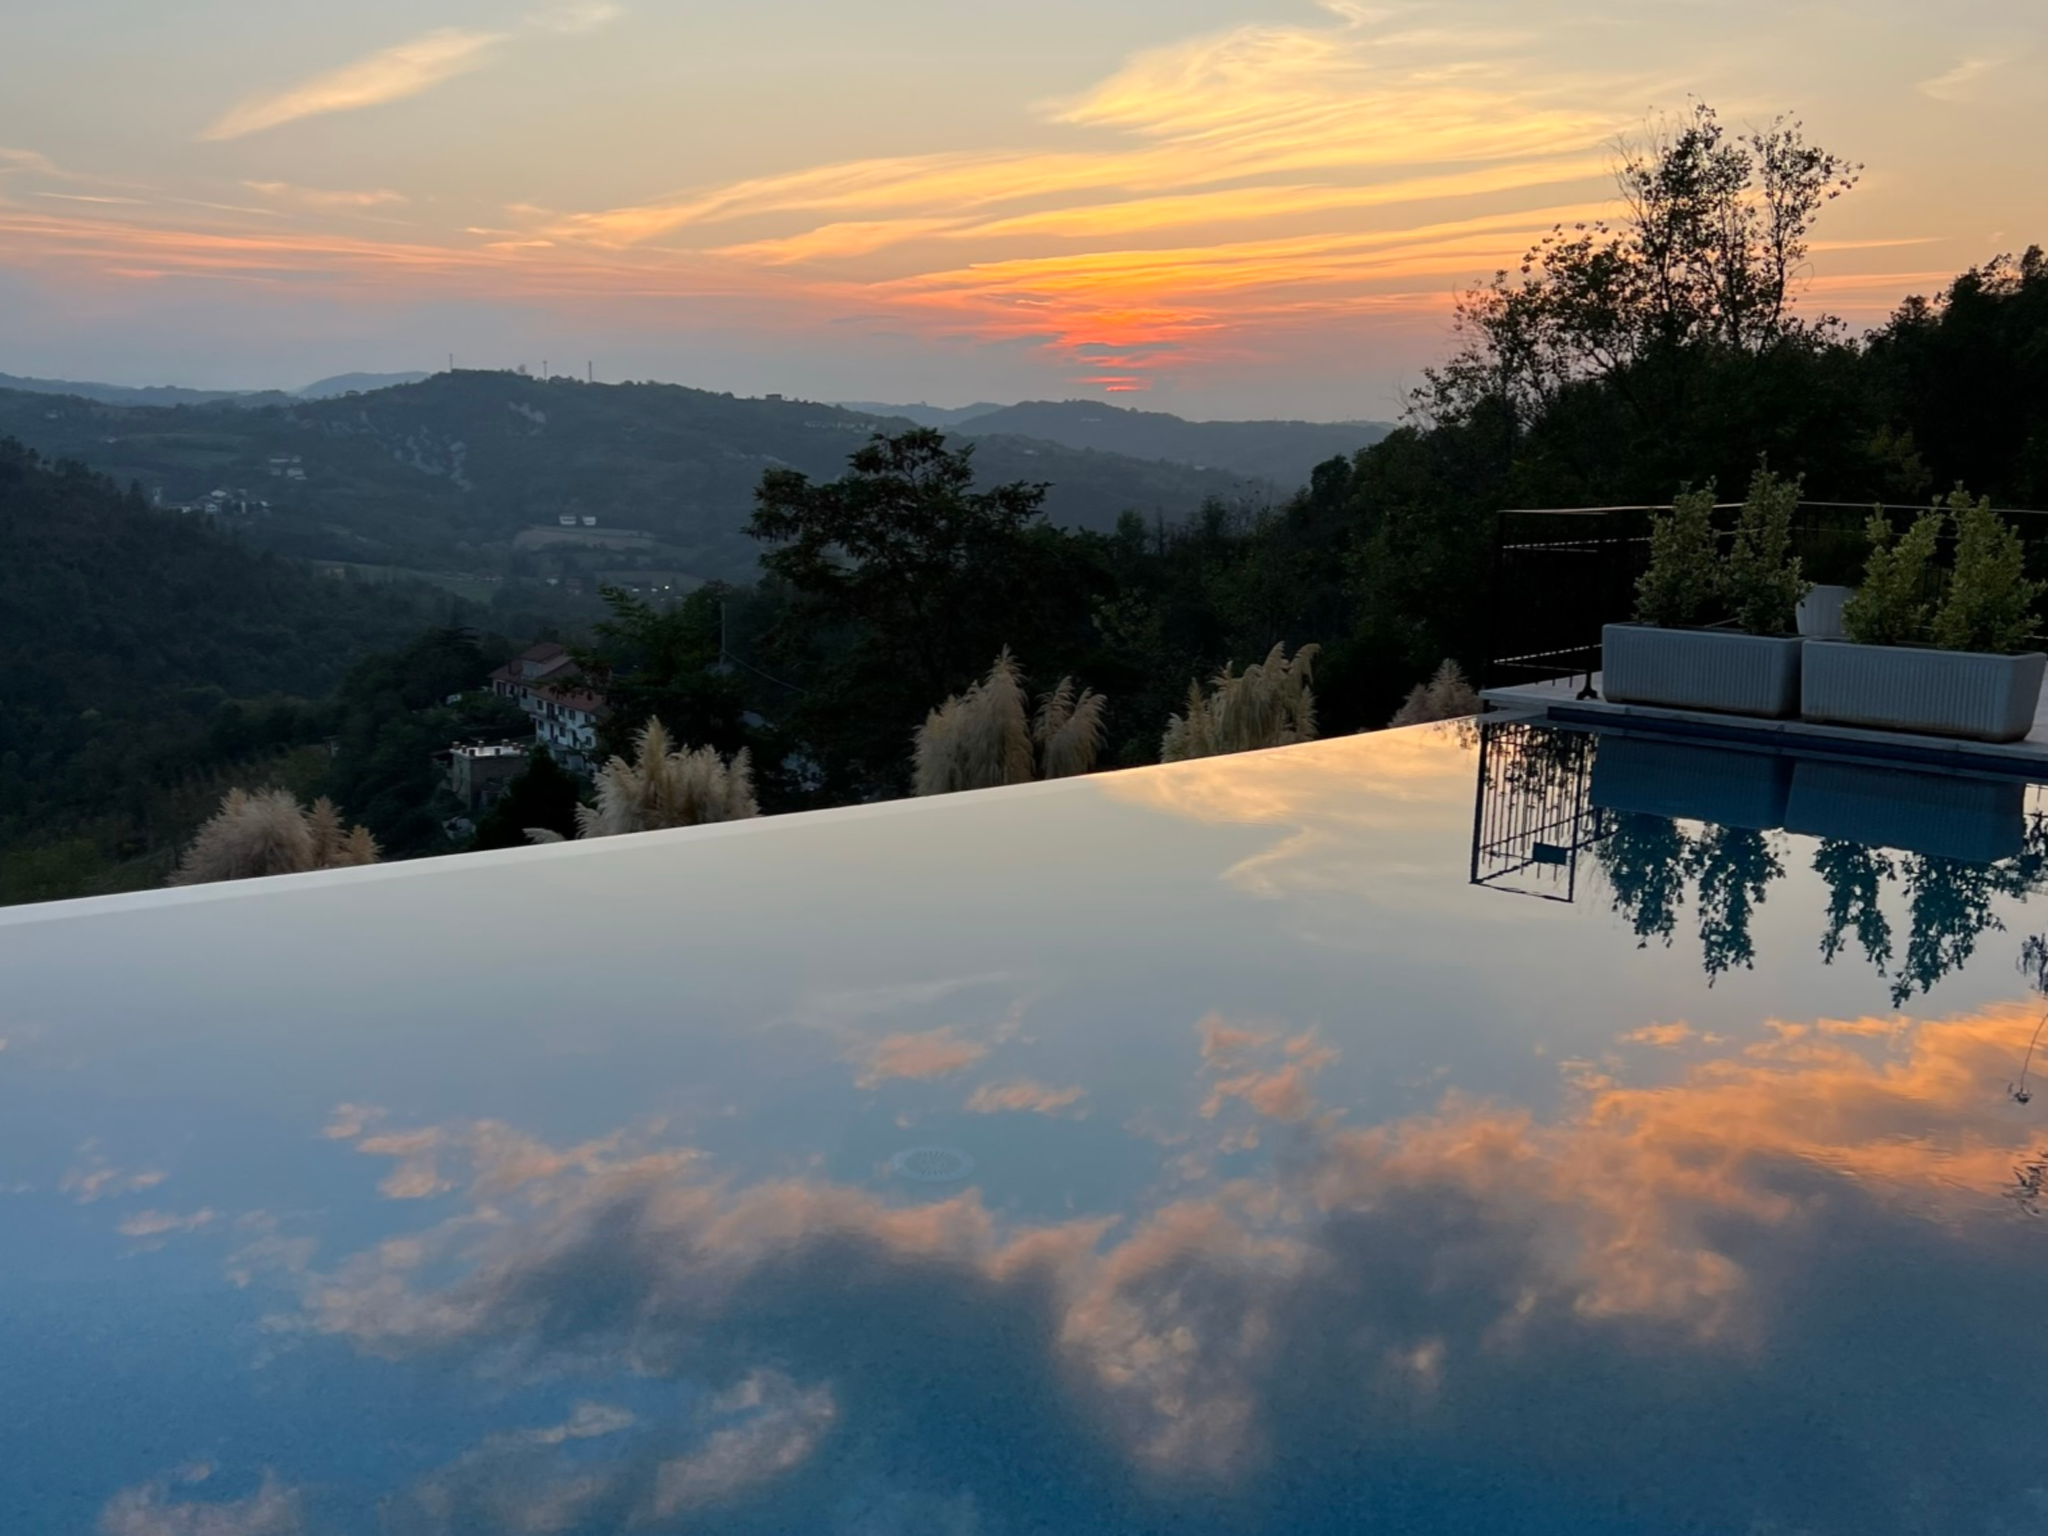 Relax in an infinity pool overlooking vineyards